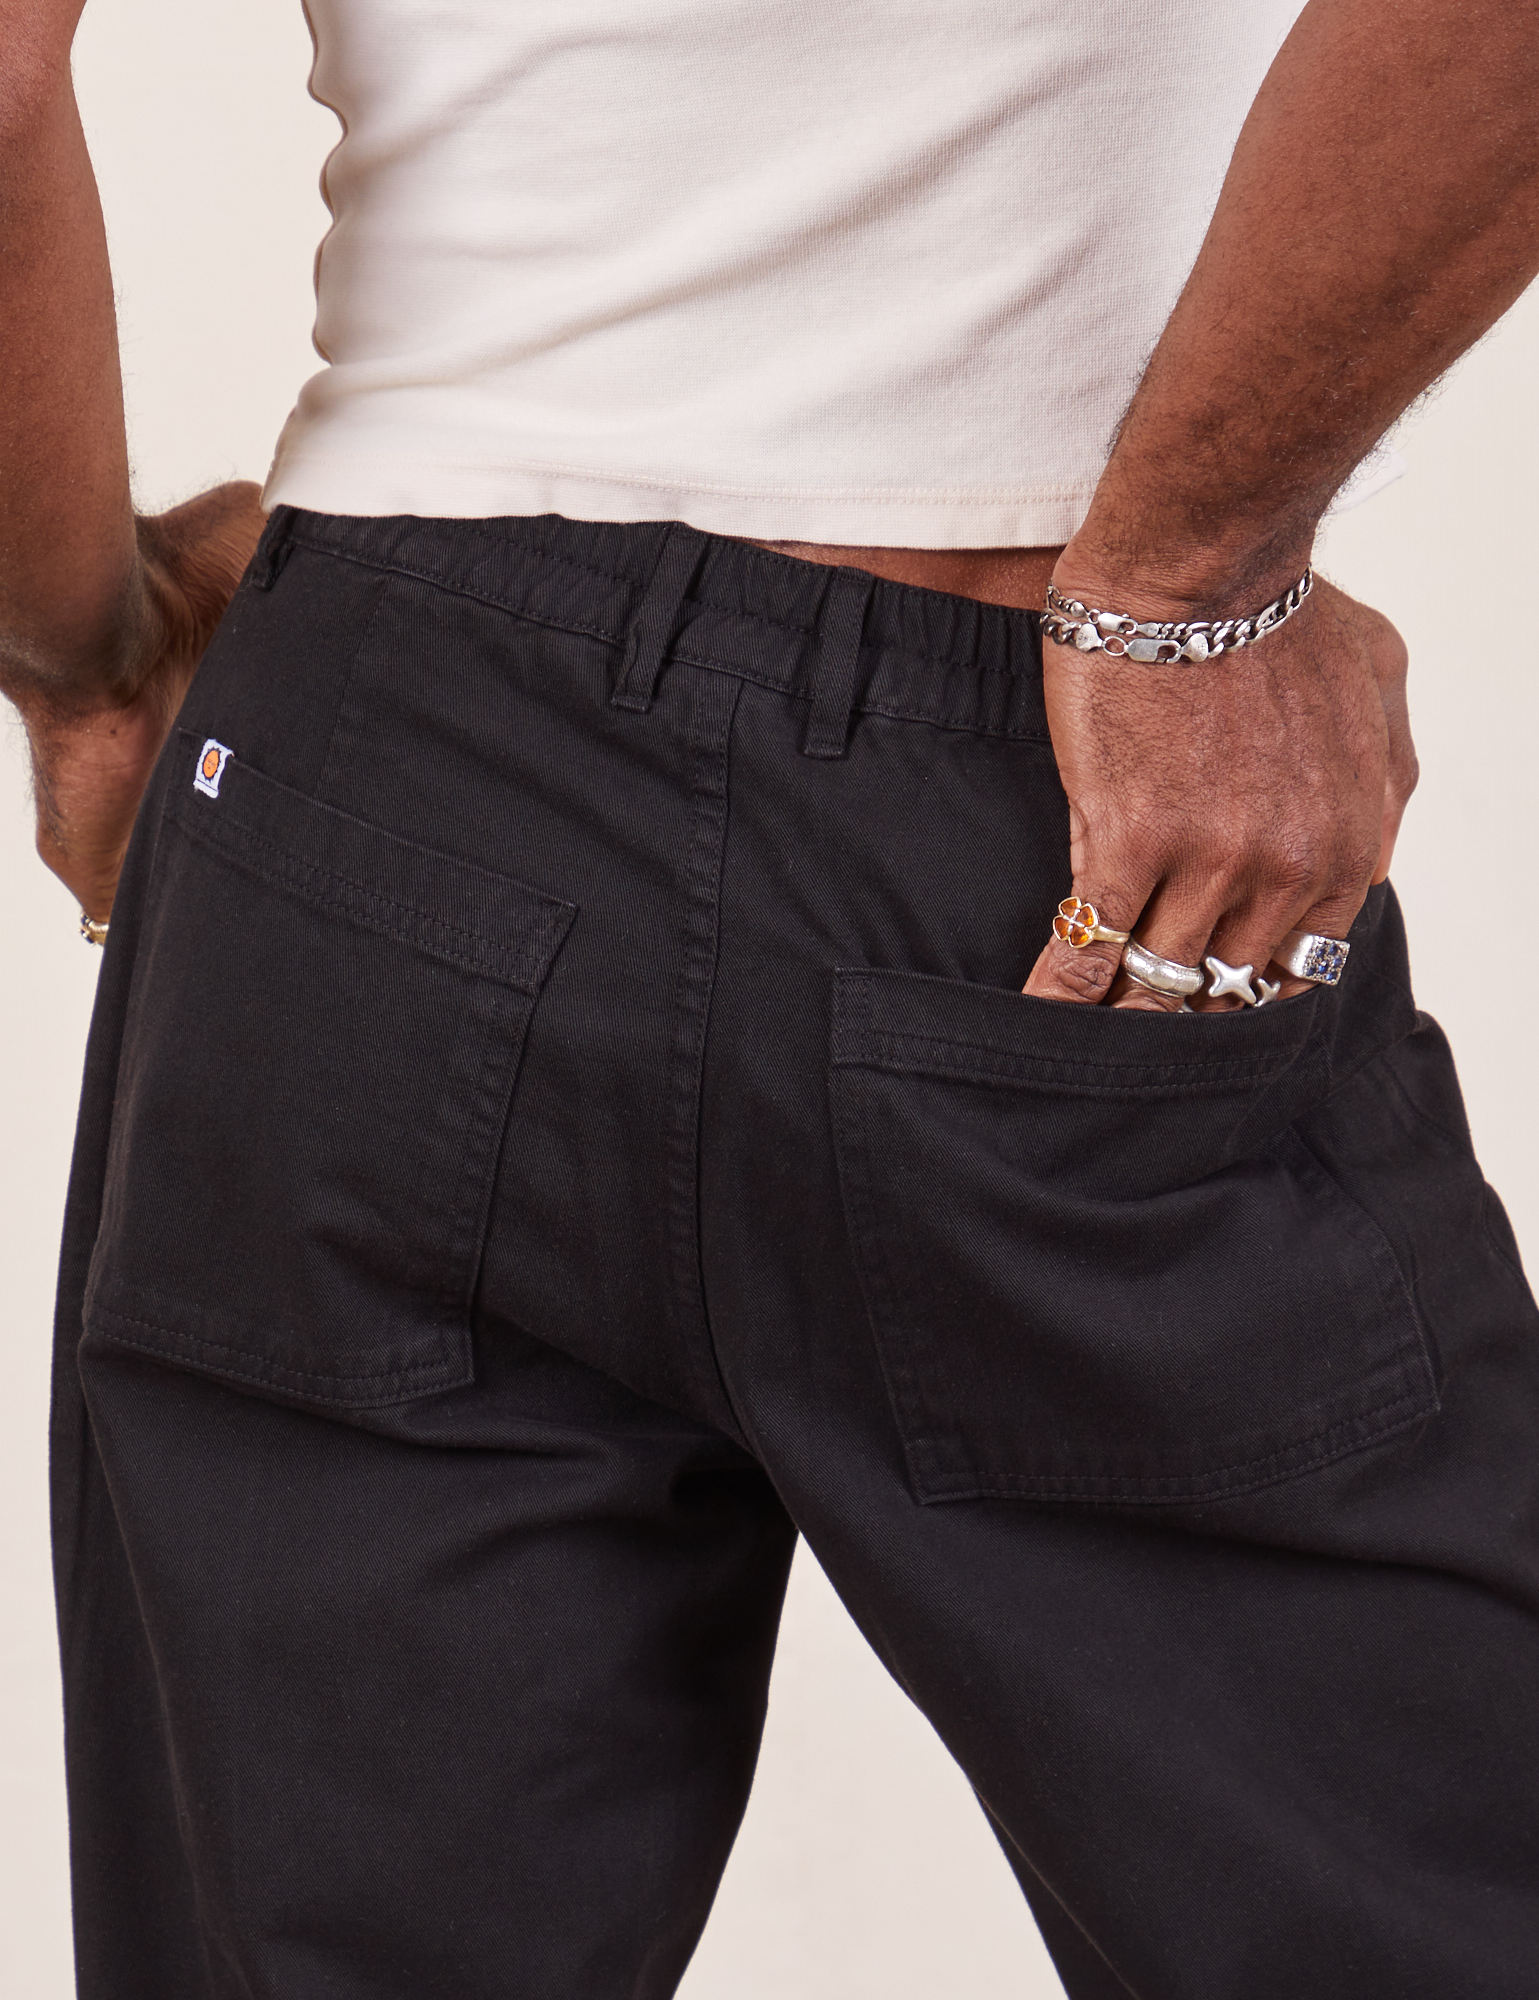 Western Pants in Basic Black back close up on Jerrod